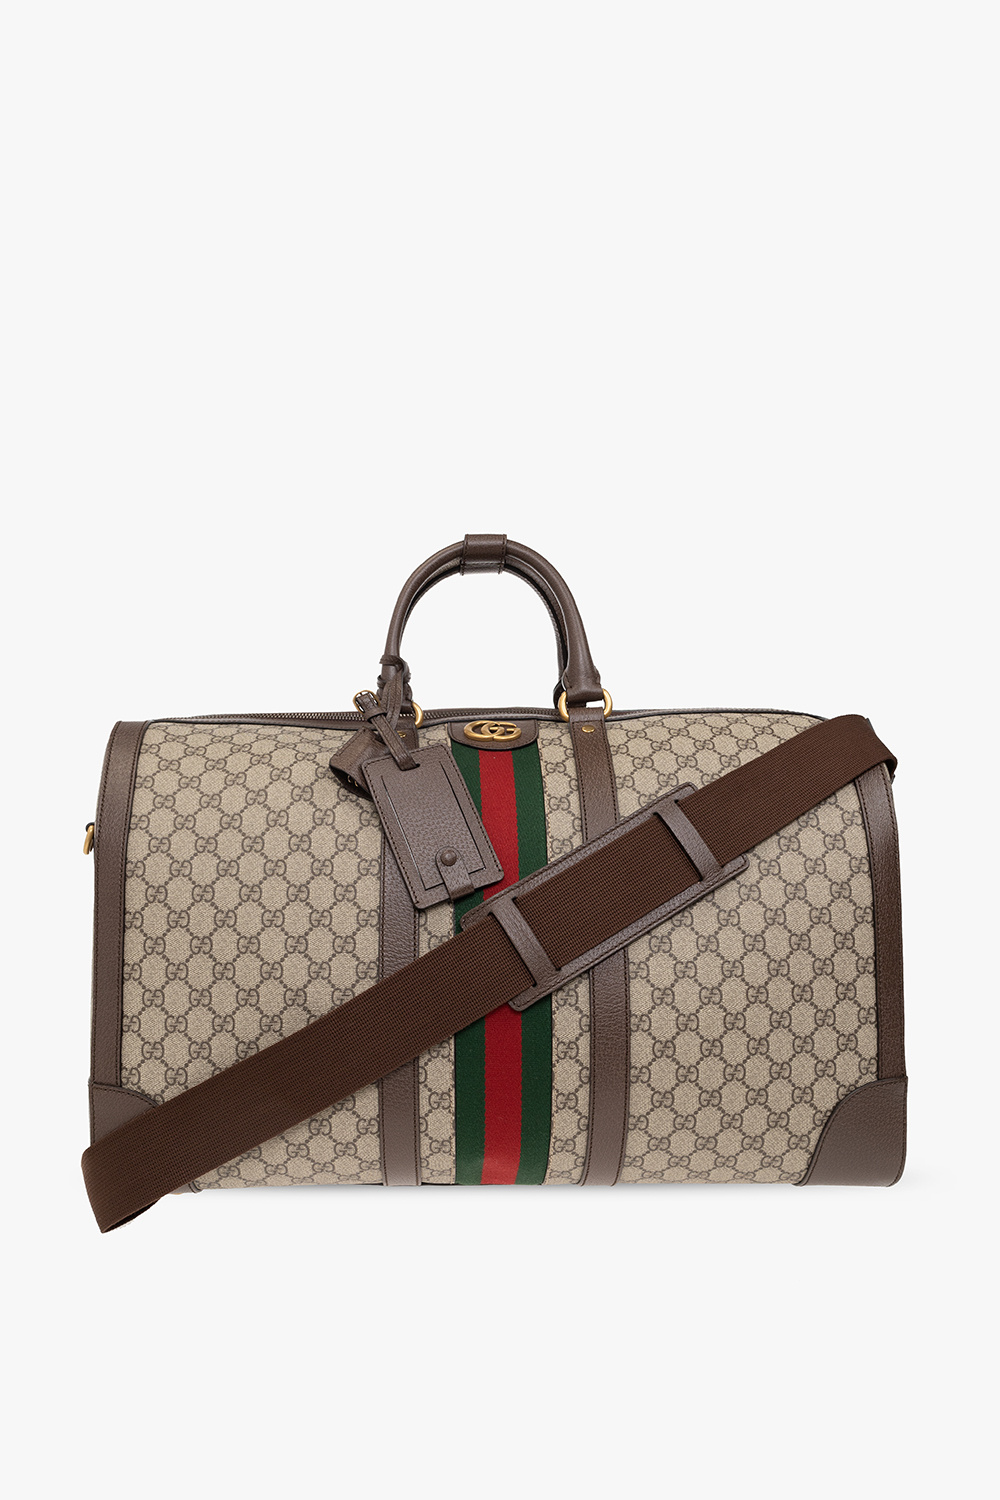 Gucci Savoy Large Duffle Bag, Beige, GG Canvas